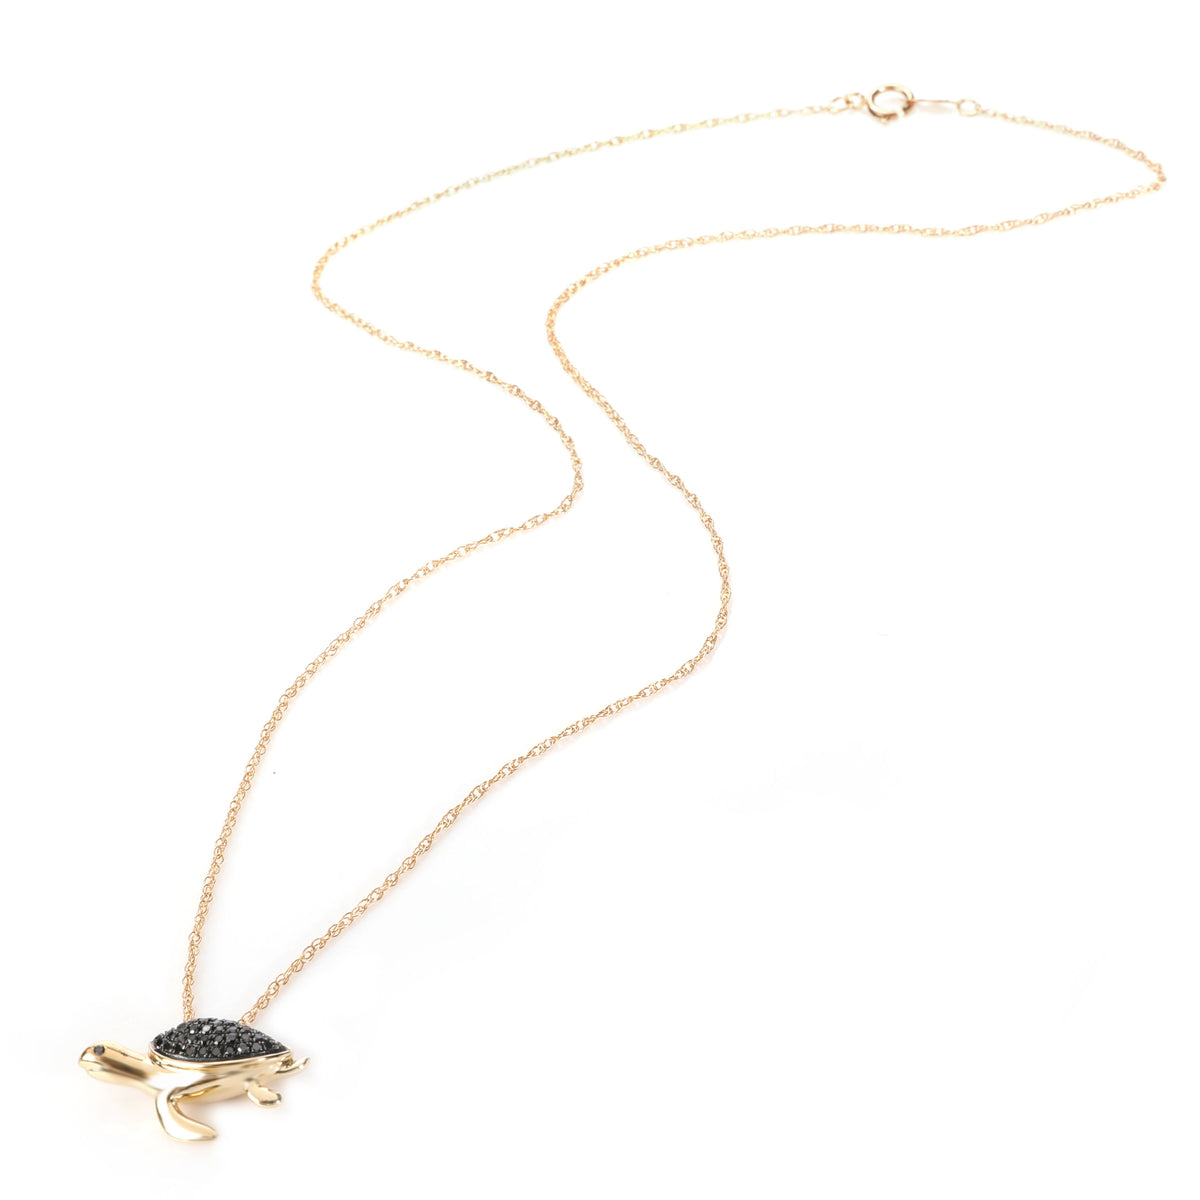 Black Diamond Turtle Pendant Necklace in 14K Yellow Gold 0.17 ctw